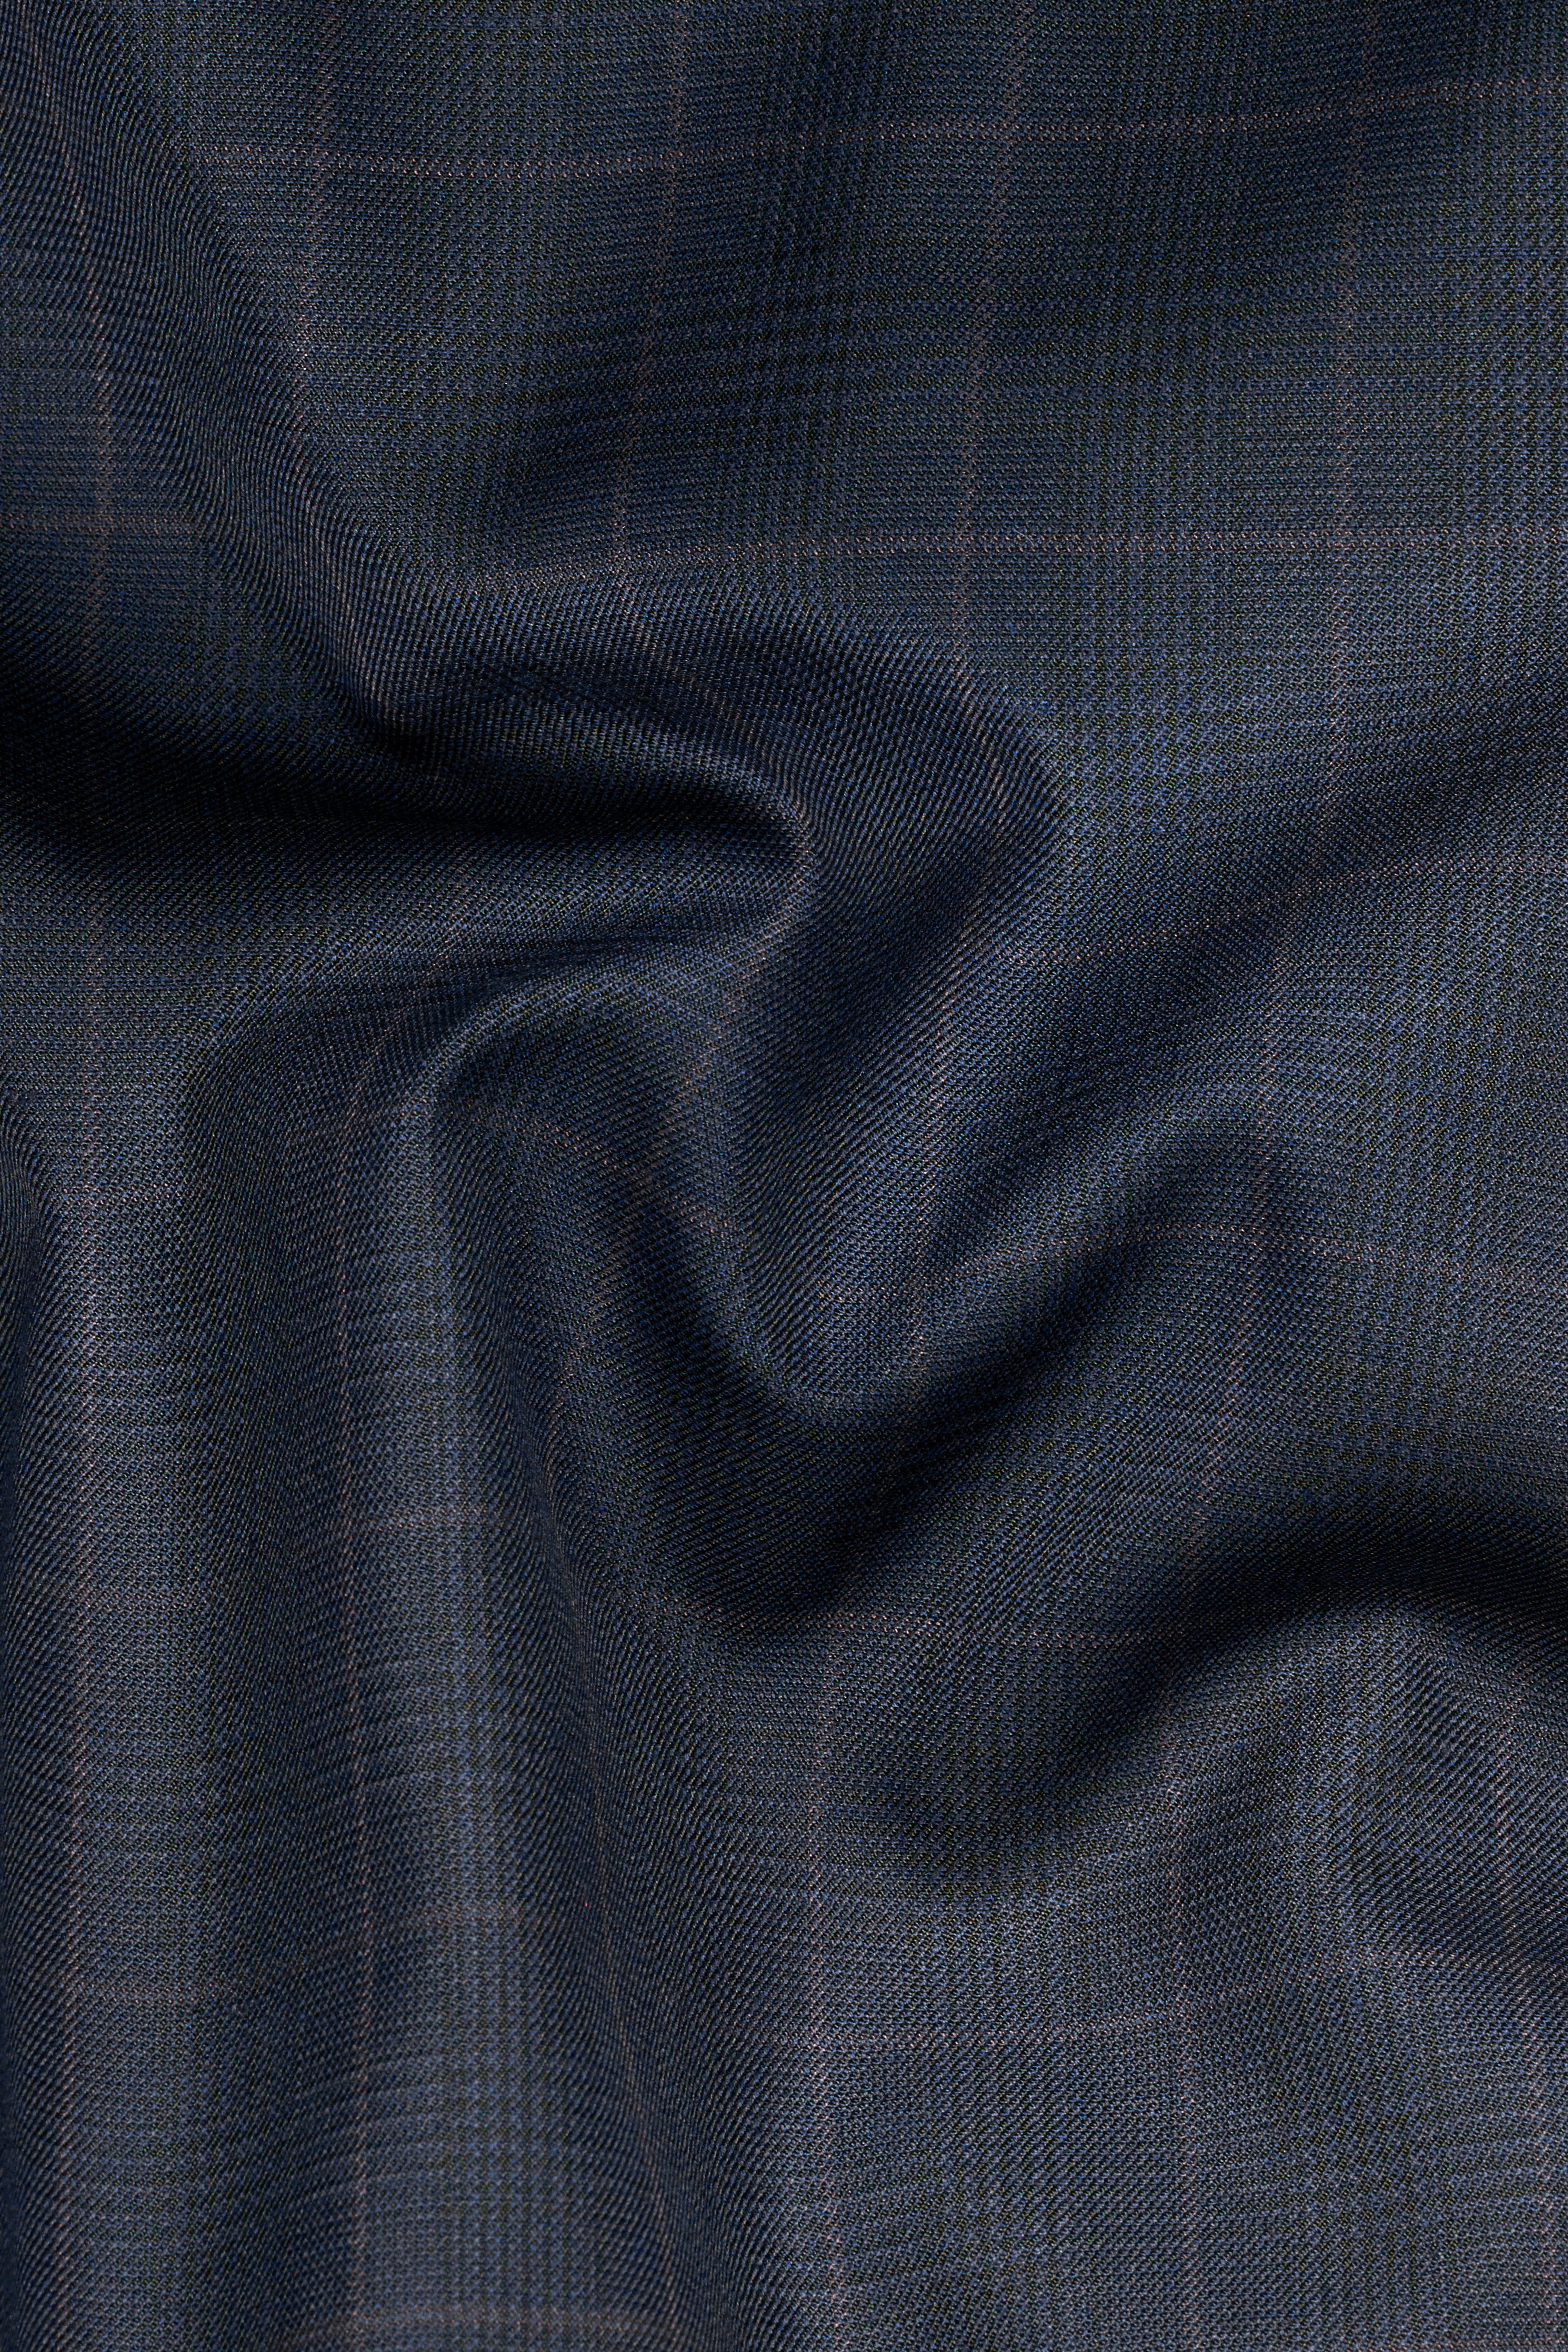 Baltic Blue Checkered Wool Rich Pant T2737-28, T2737-30, T2737-32, T2737-34, T2737-36, T2737-38, T2737-40, T2737-42, T2737-44